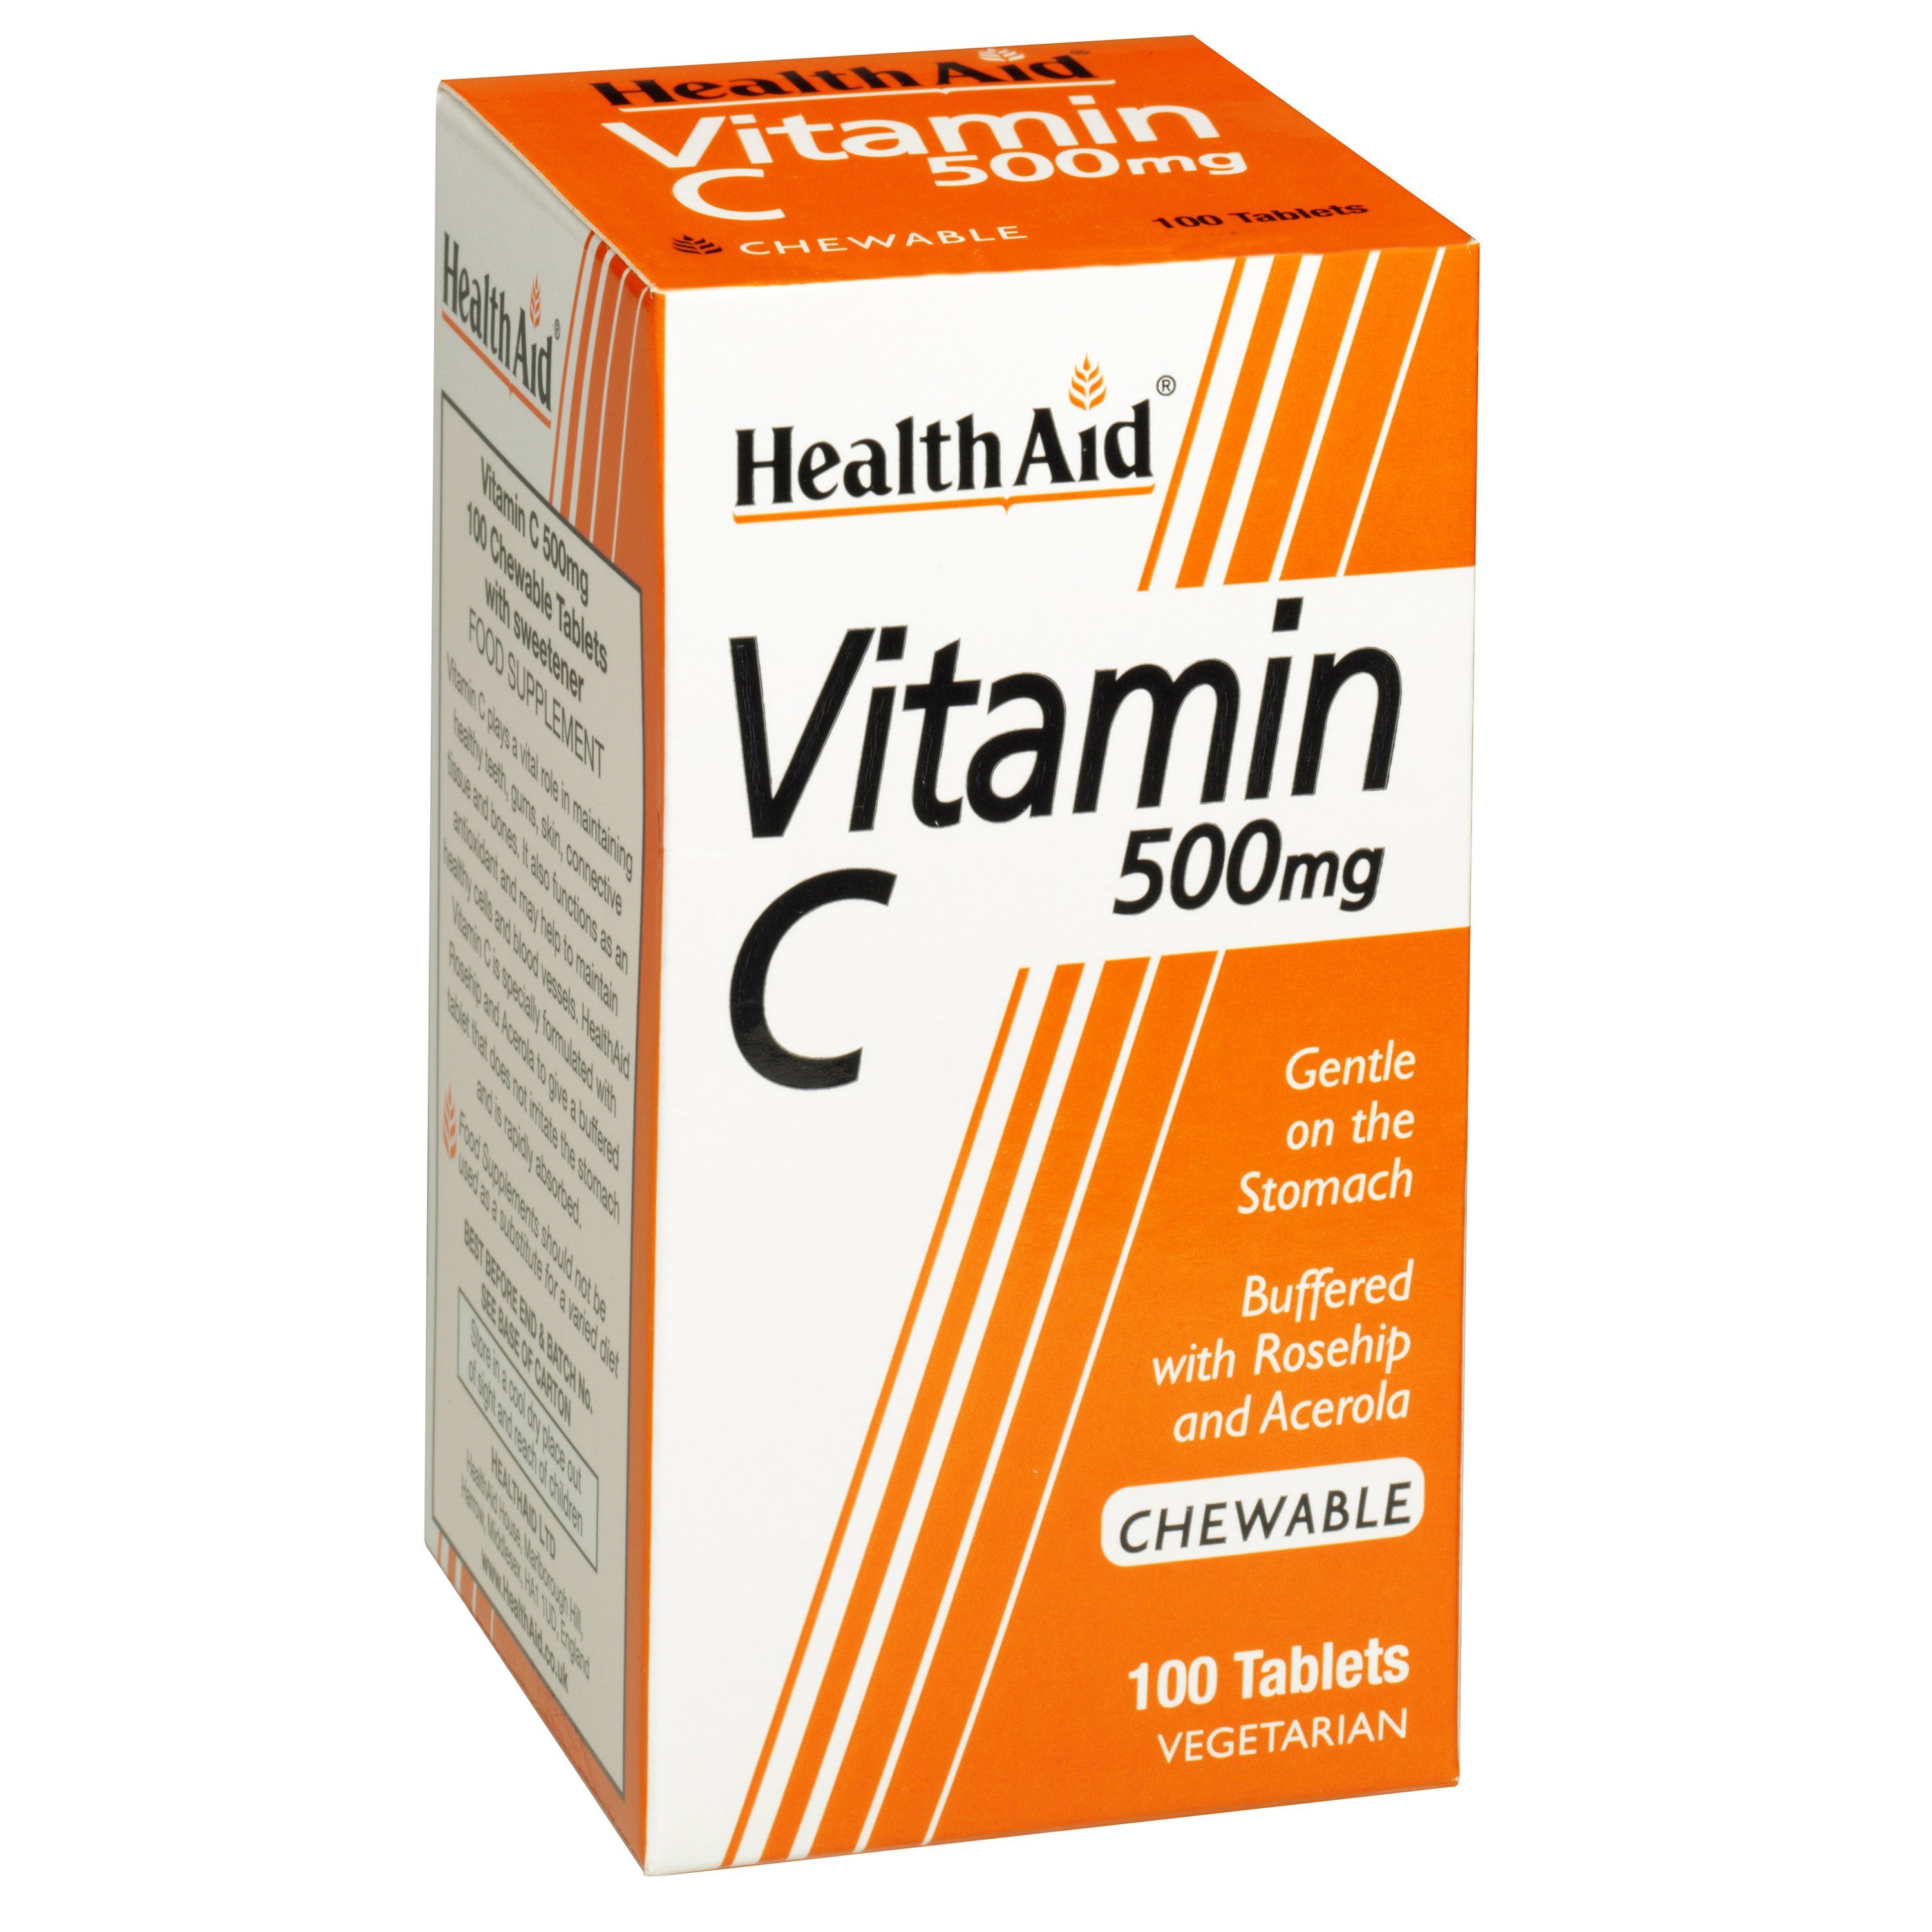 Health Aid Vitamin C 500mg Μασώμενη Βιταμίνη C με Αντιοξειδωτική Δράση 100 chew. tabs